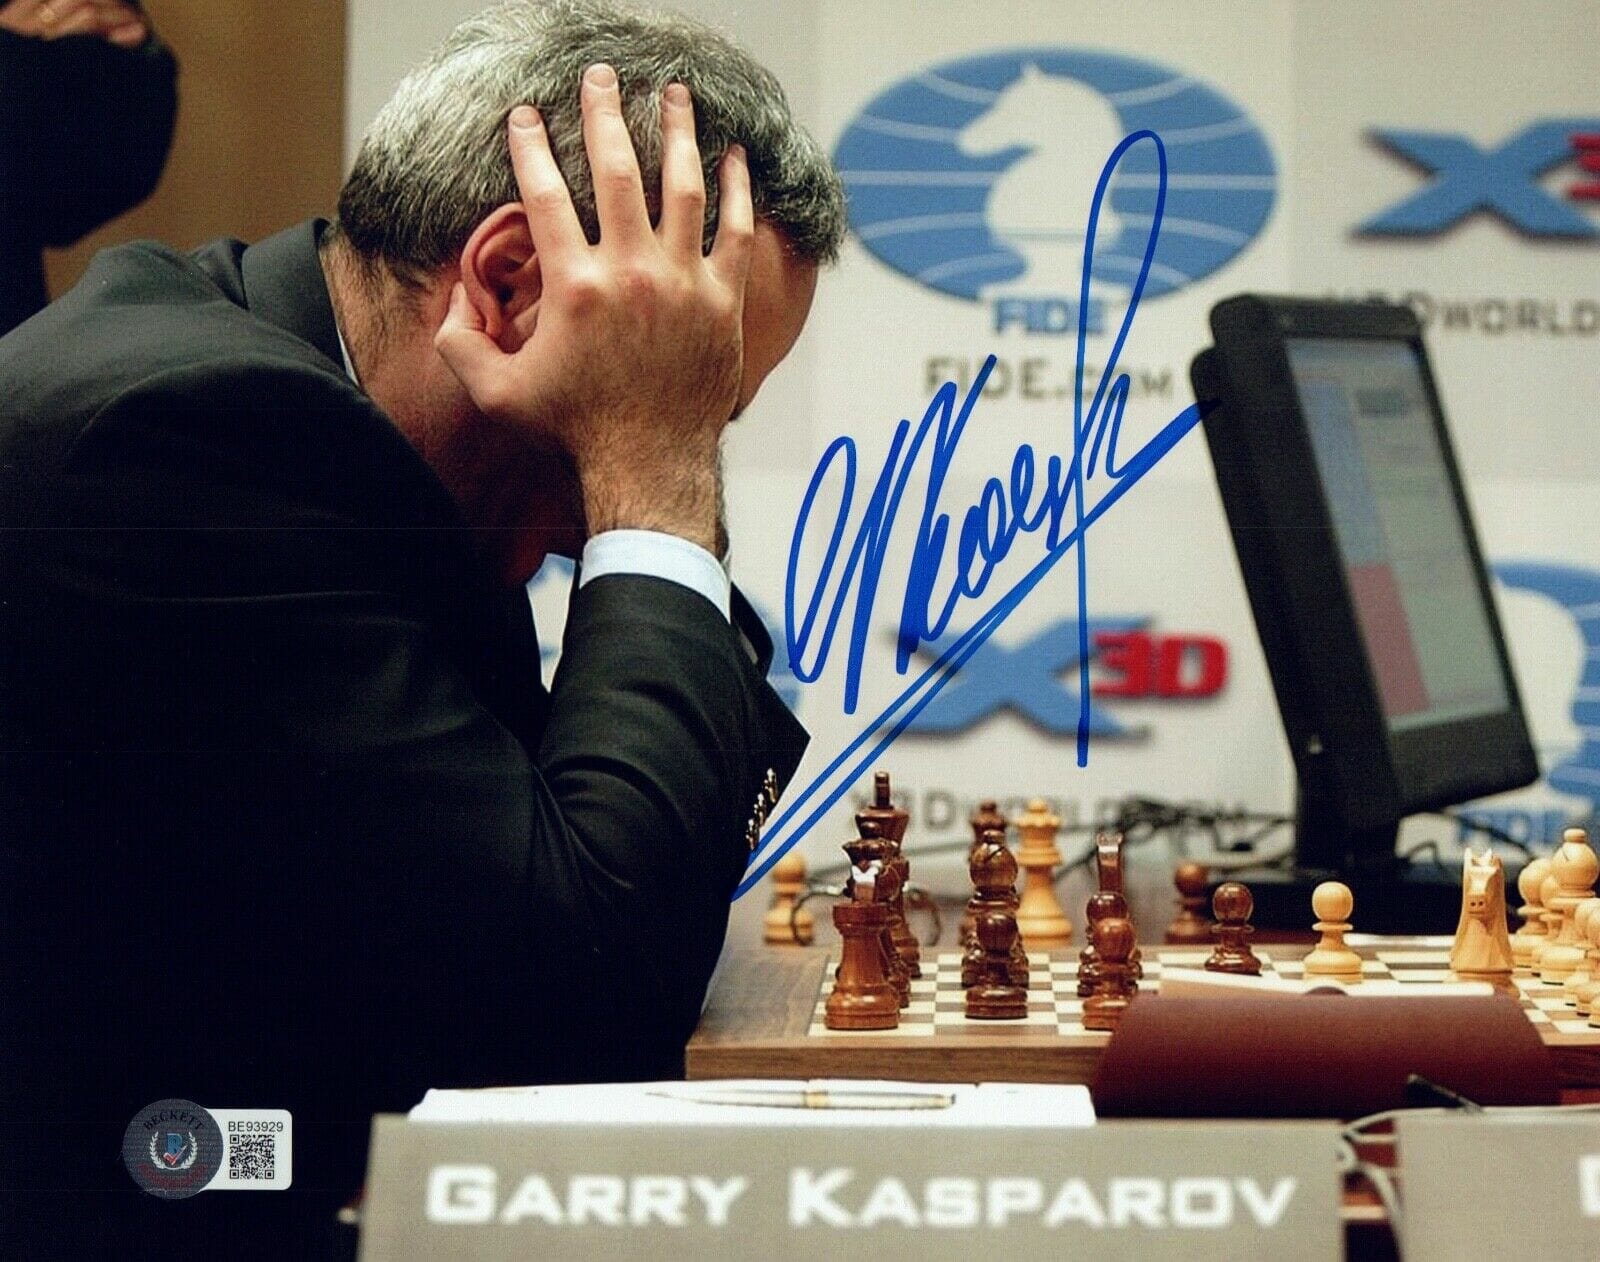 GARRY KASPAROV HAND SIGNED 8x10 PHOTO AUTOGRAPHED CHESS GRANDMASTER  CHAMPION COA